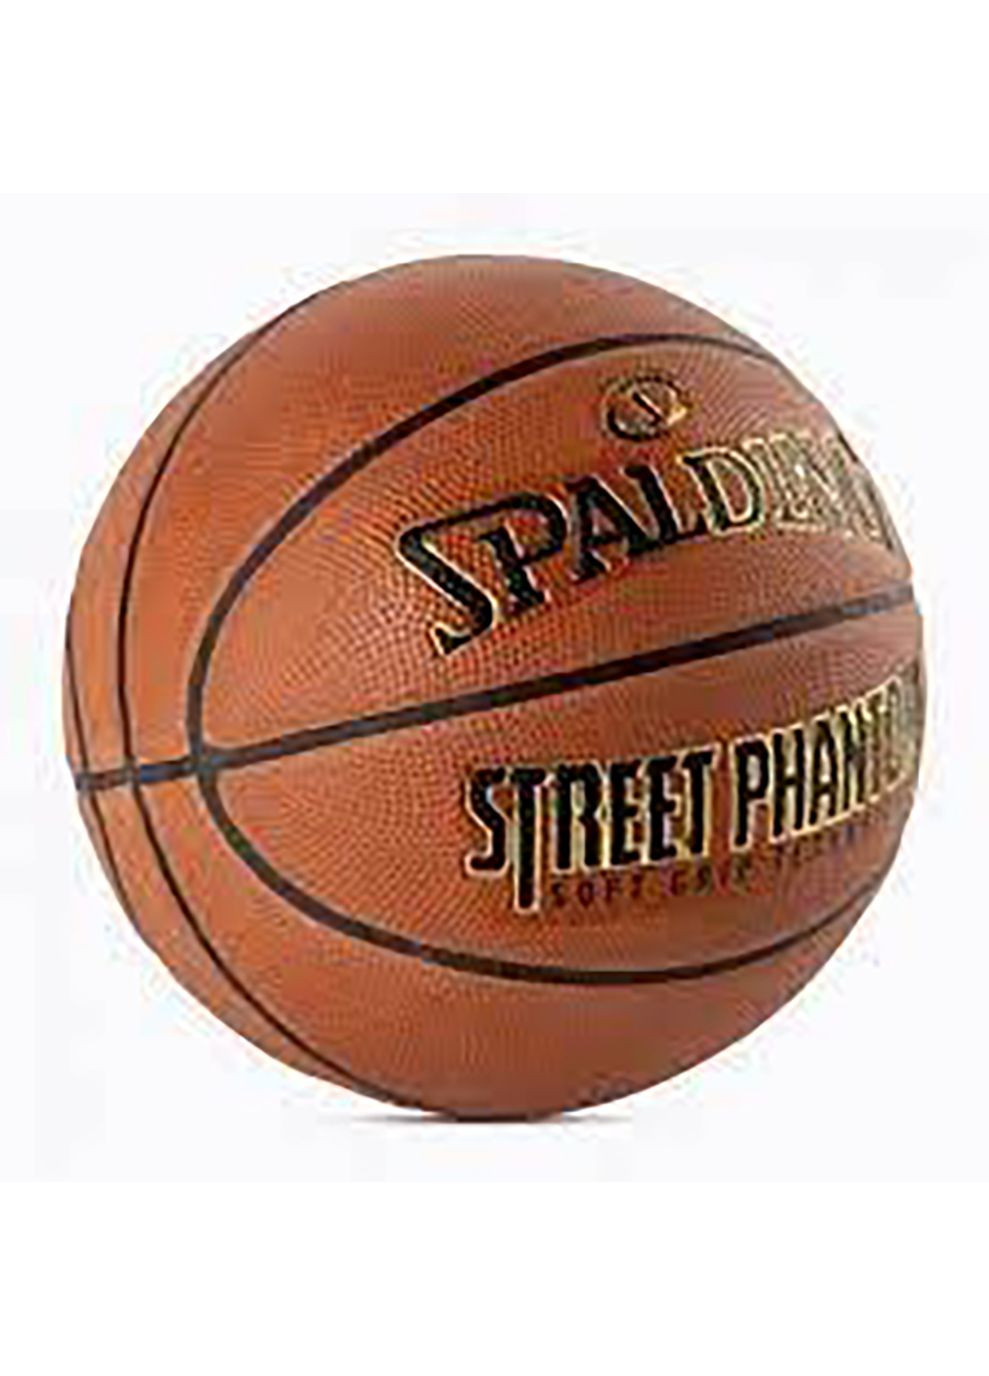 Баскетбольный Мяч Street Phantom оранжевый Уни 7 Spalding (268833523)